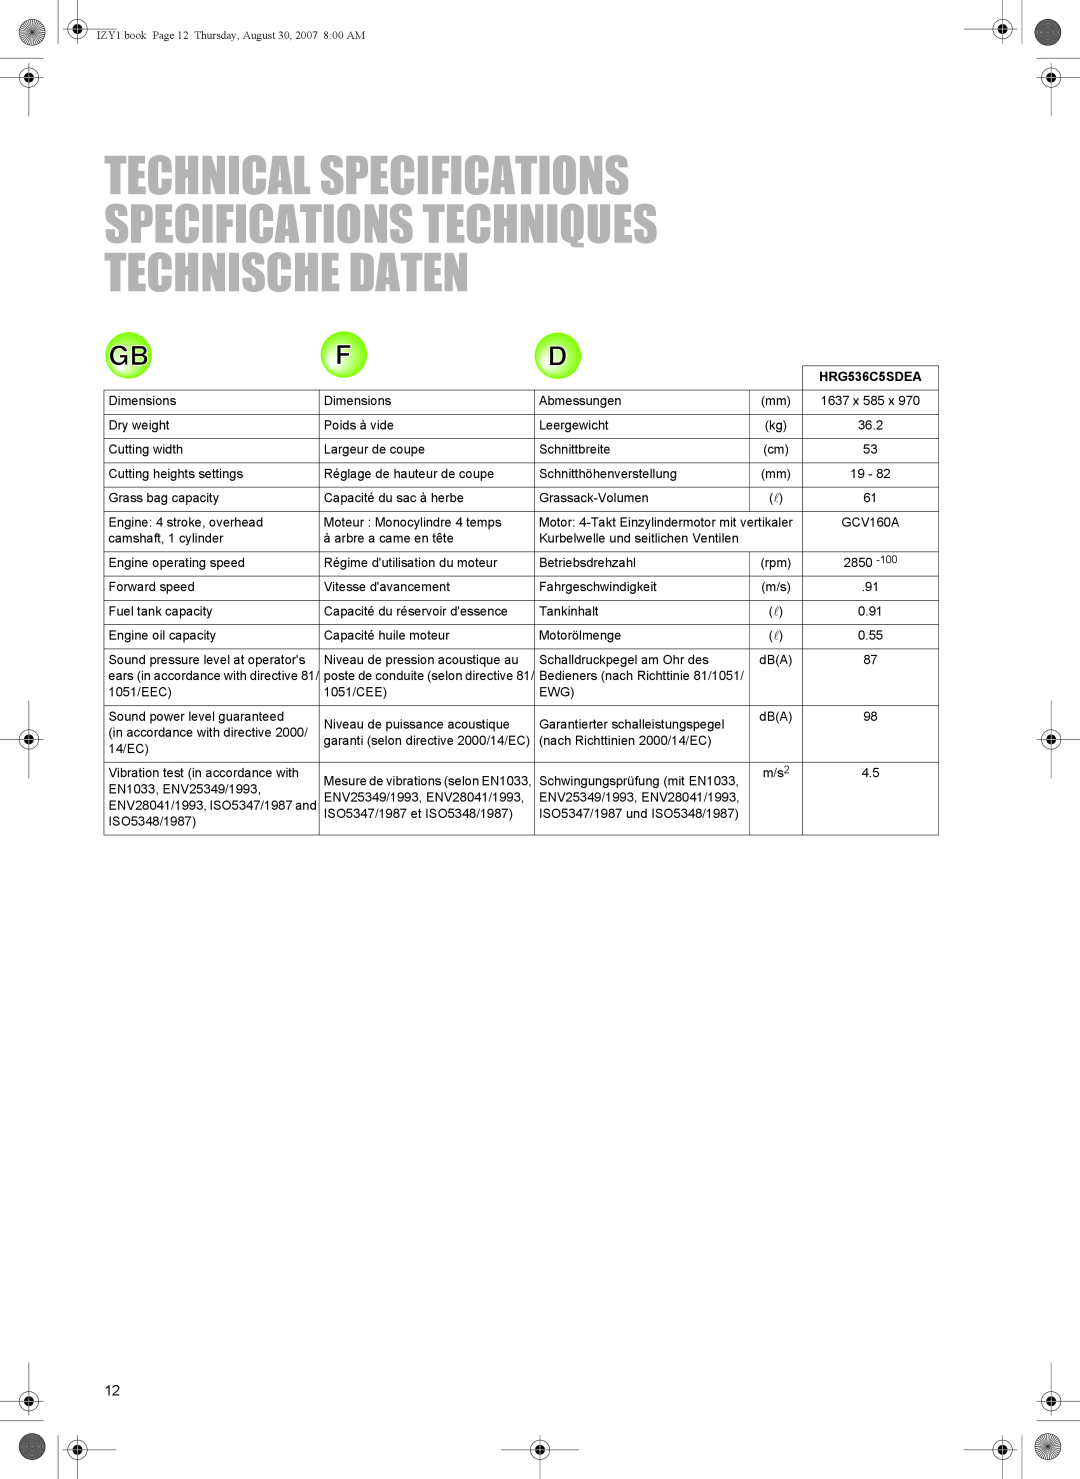 Honda Power Equipment owner manual Technical Specifications, Specifications Techniques Technische Daten, HRG536C5SDEA 